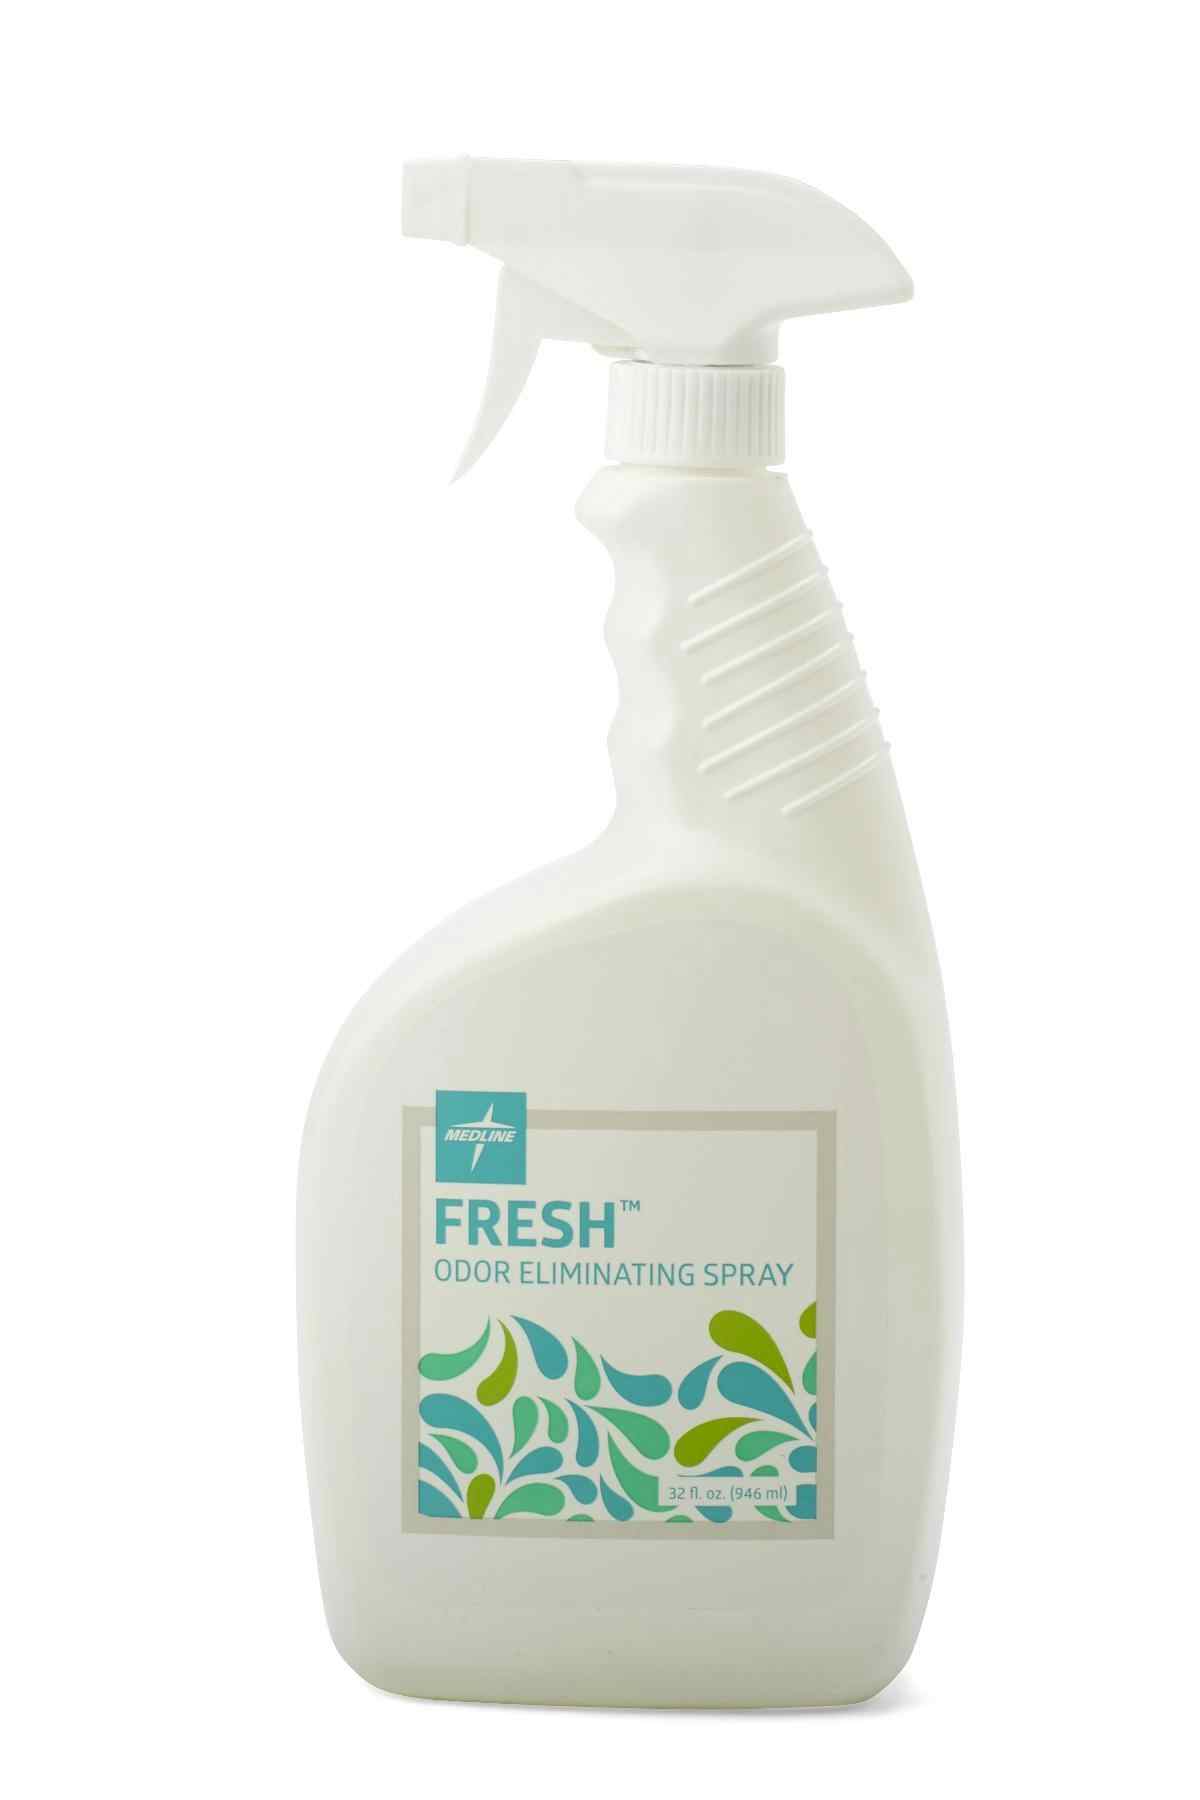 Medline Fresh Naturals Odor Eliminator Spray, MF553, 32 oz. - Case of 6